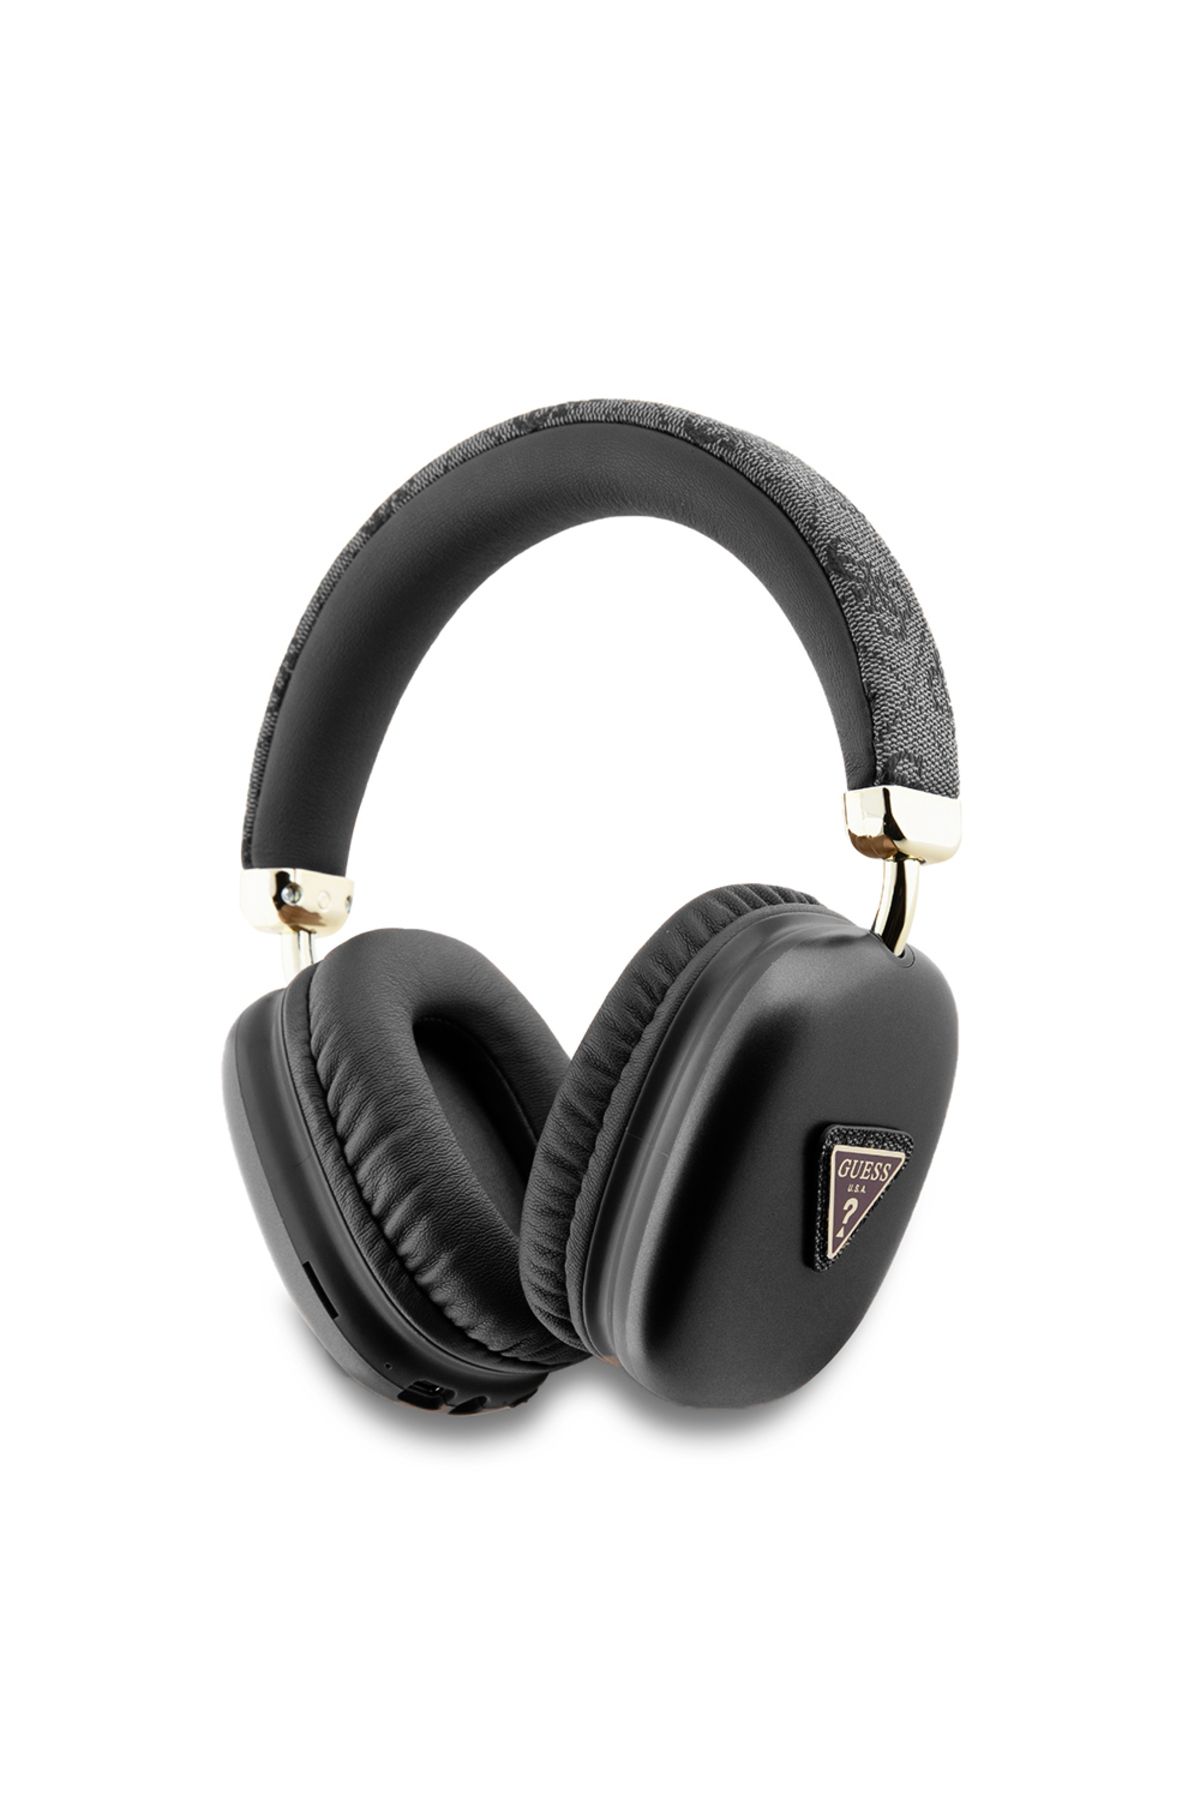 Guess Lisanslı Kulak Üstü Bluetooth Kulaklık Guess PU 4G Desenli Üçgen Logolu V5.3 Siyah